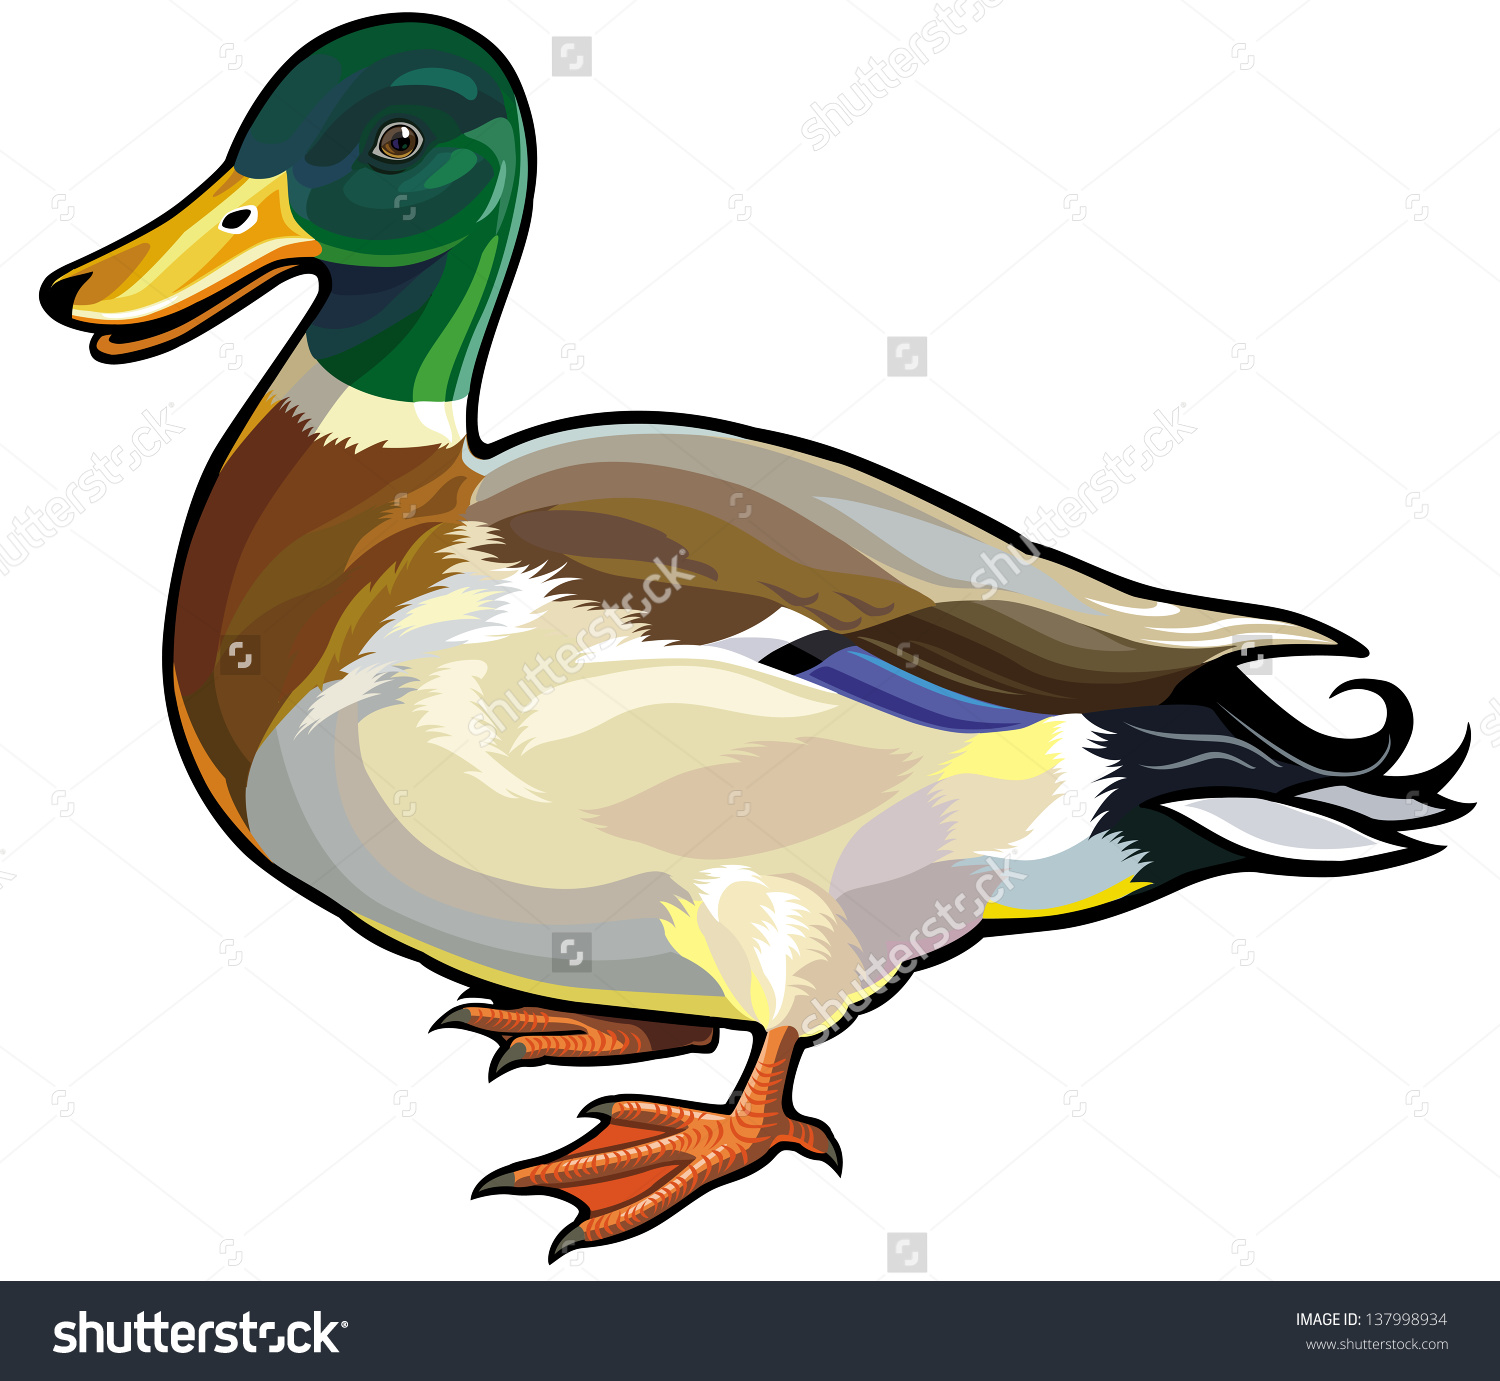 green duck clipart - photo #37